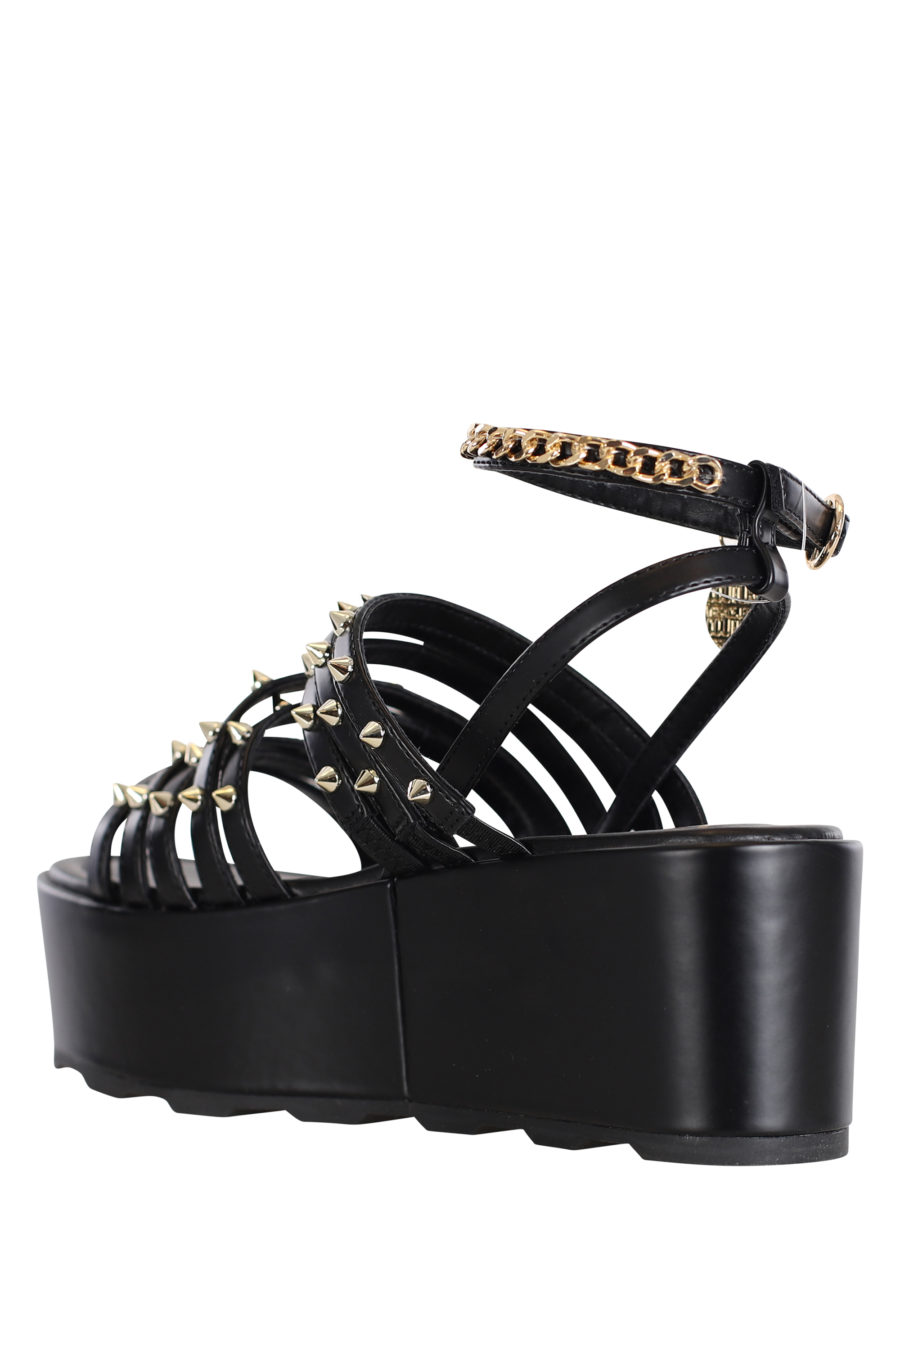 Sandalias negras con plataforma y detalles dorados - IMG 0186